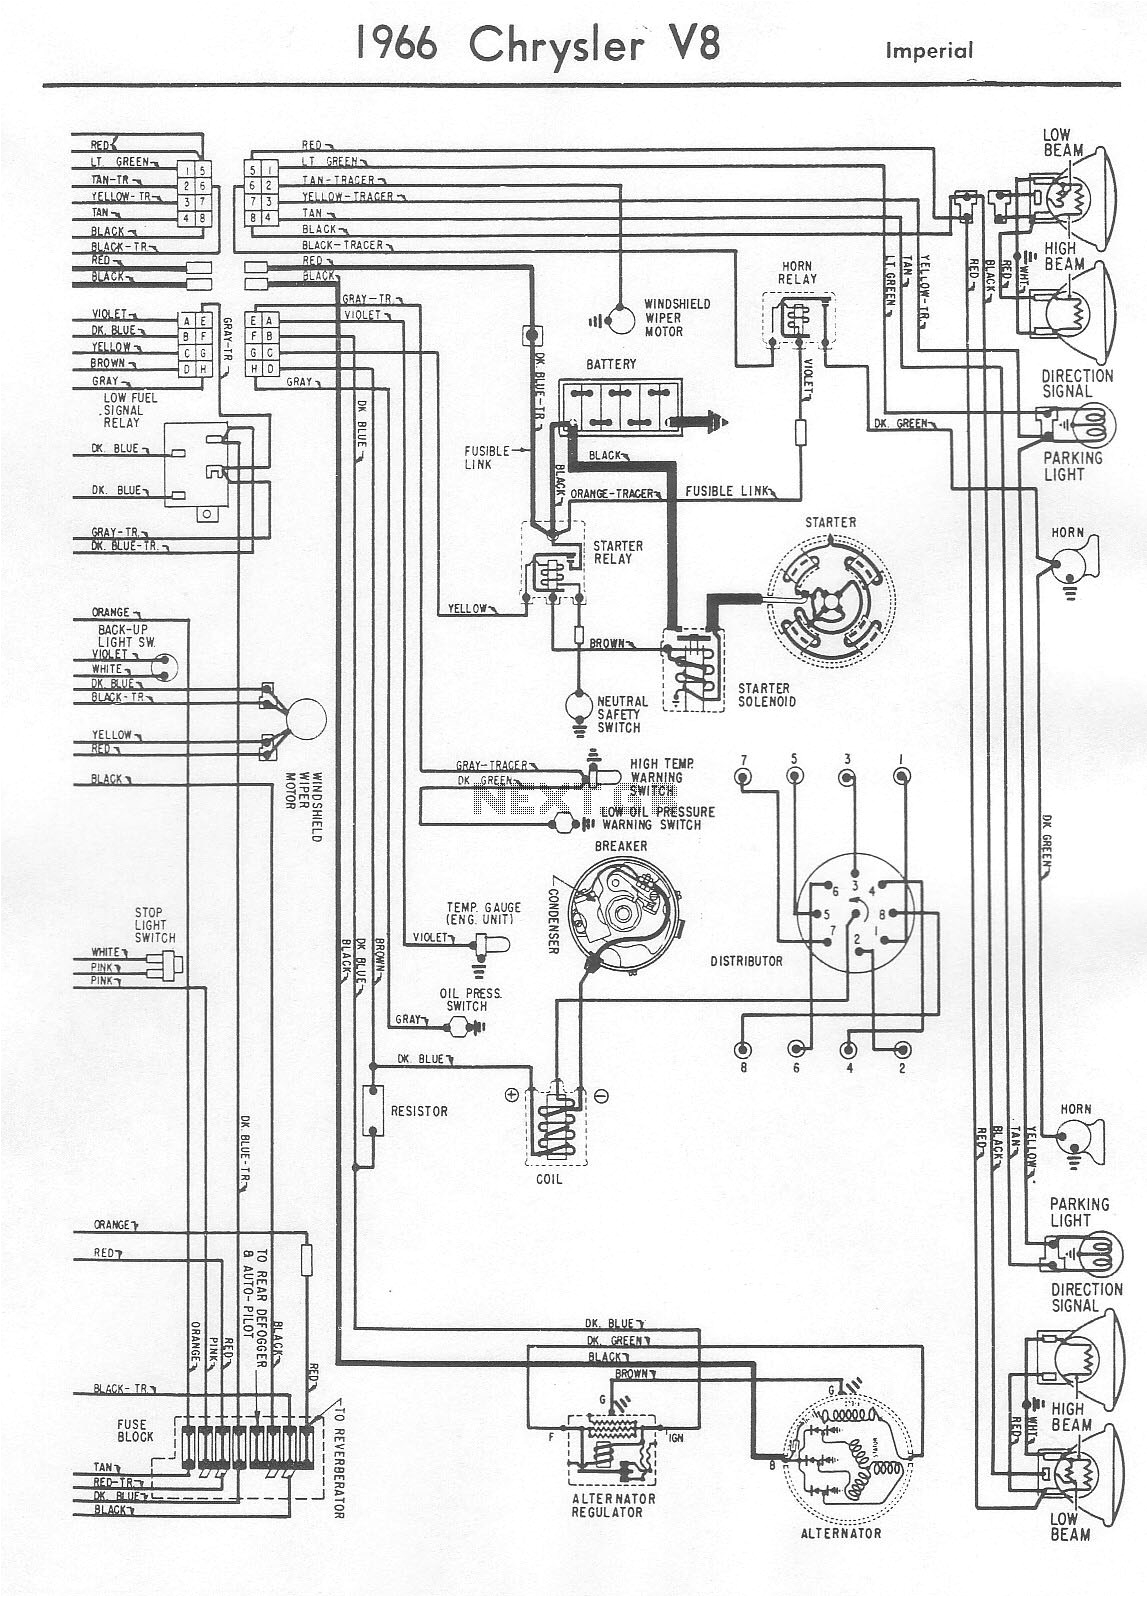 1966 chrysler imperial wiring diagram jpg